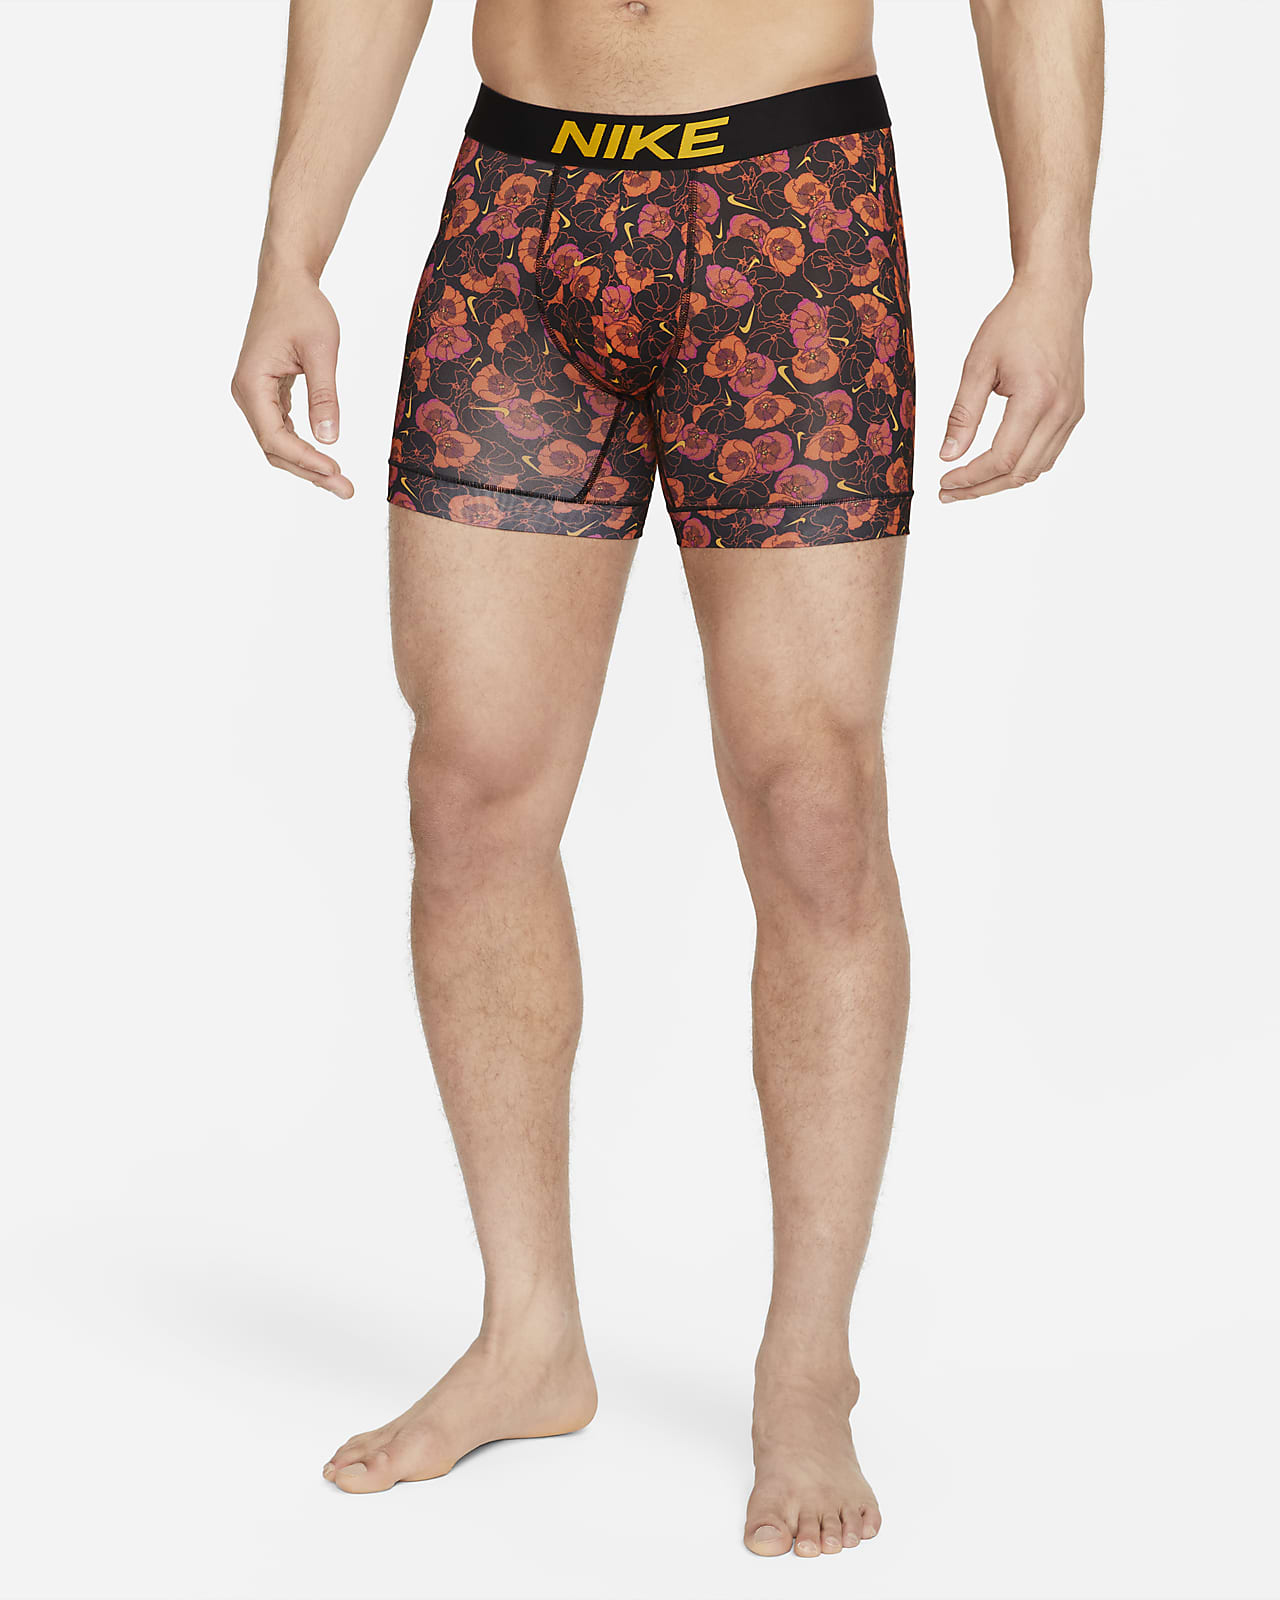 3pcs/pack Men's Underwear, Loose Fit Boxer Shorts With Wide Leg